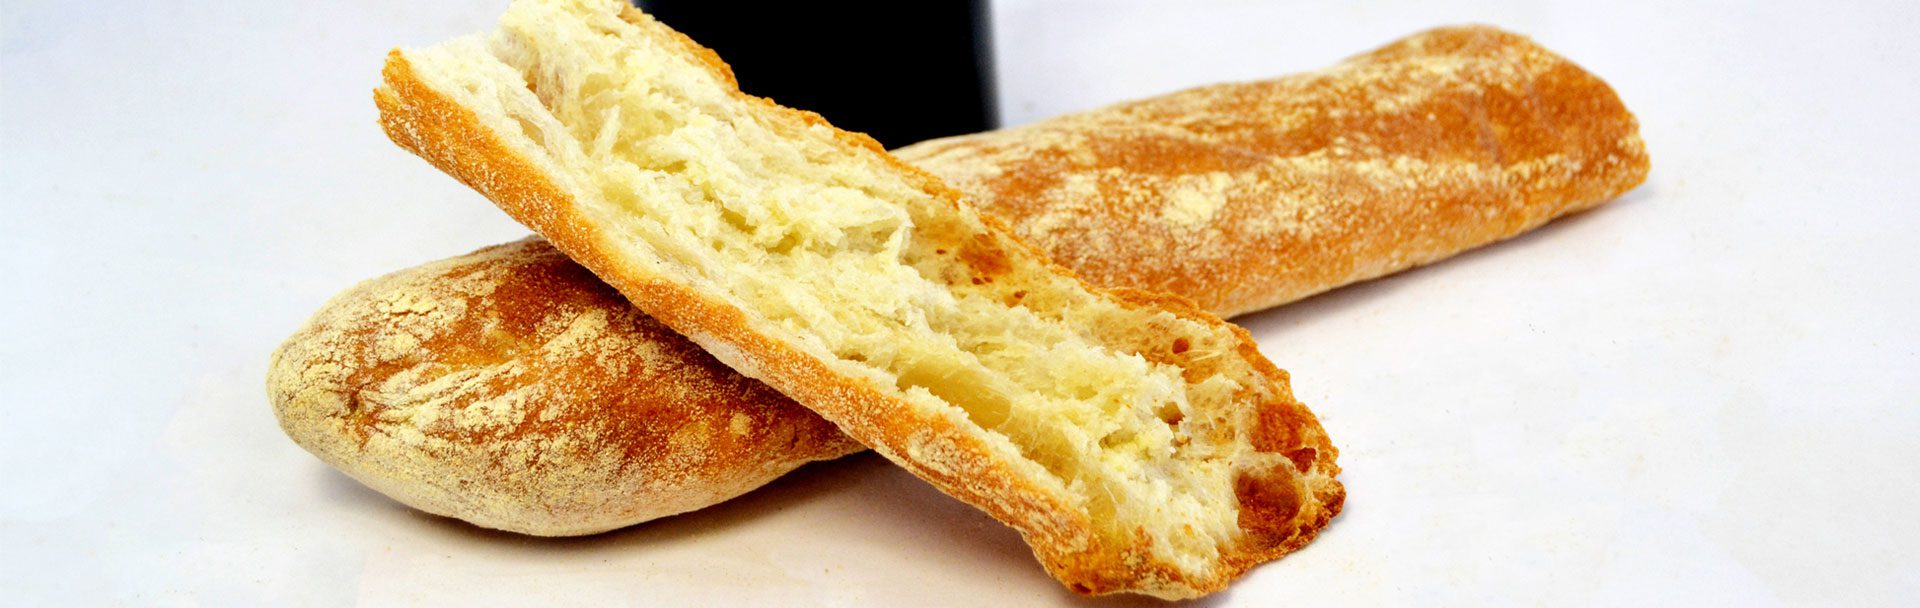 Pa de vidre or glass bread with flour